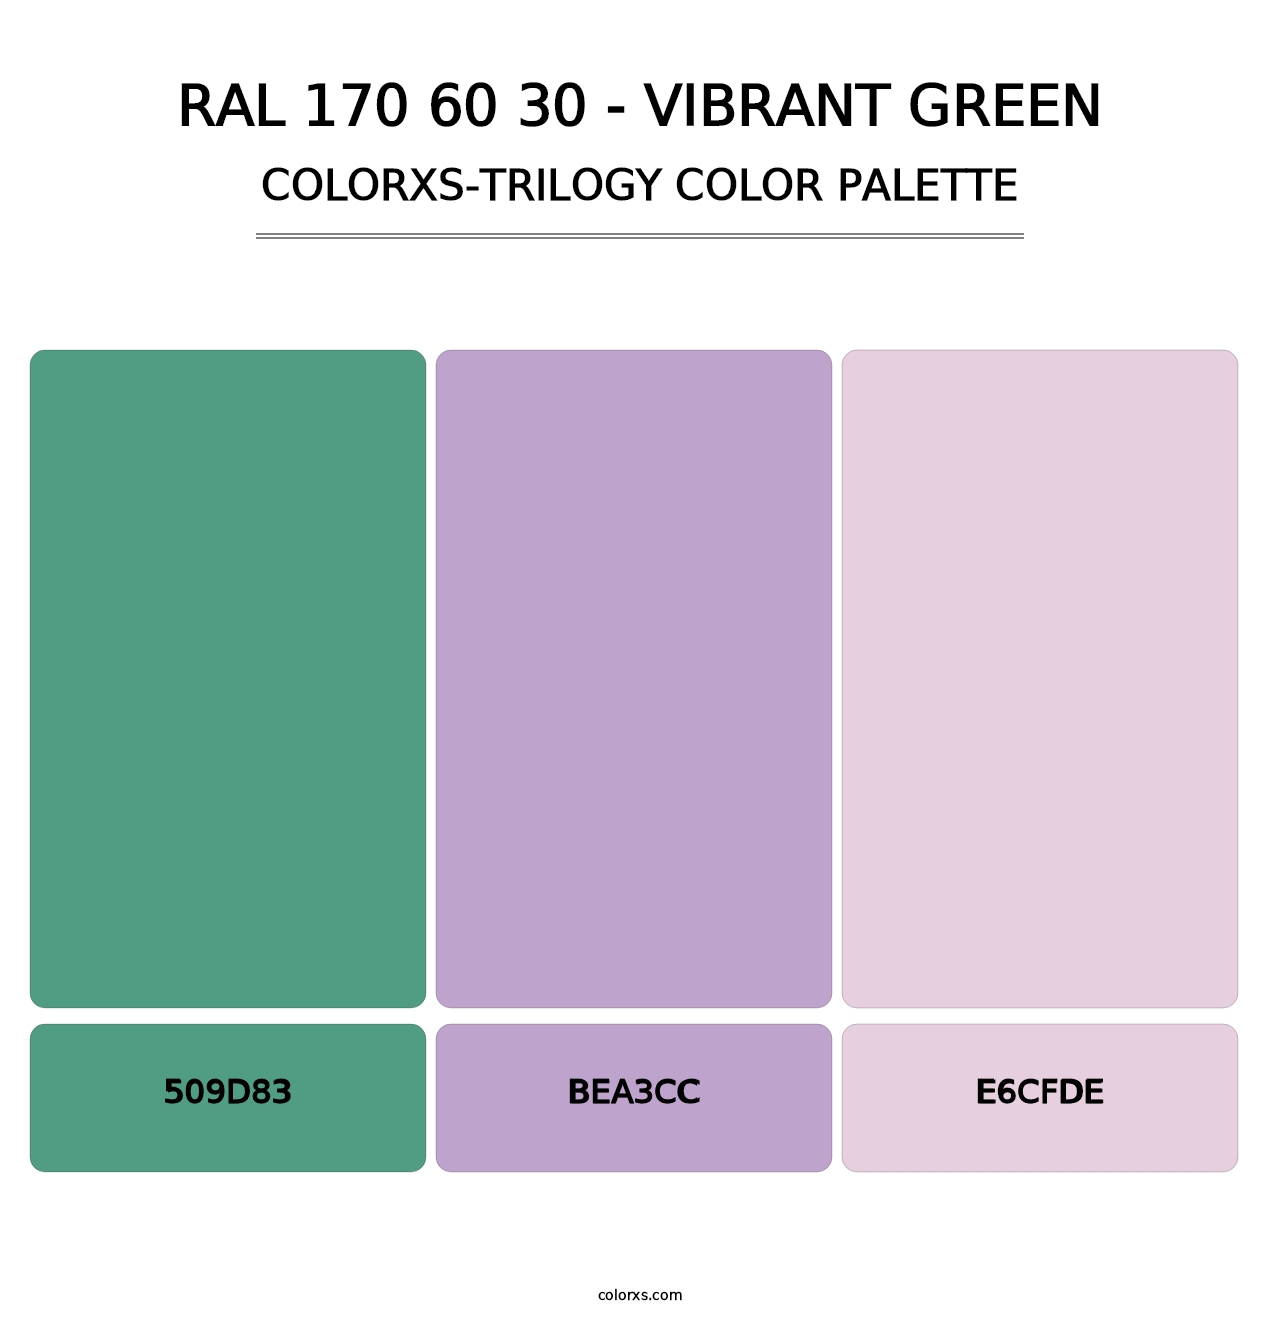 RAL 170 60 30 - Vibrant Green - Colorxs Trilogy Palette